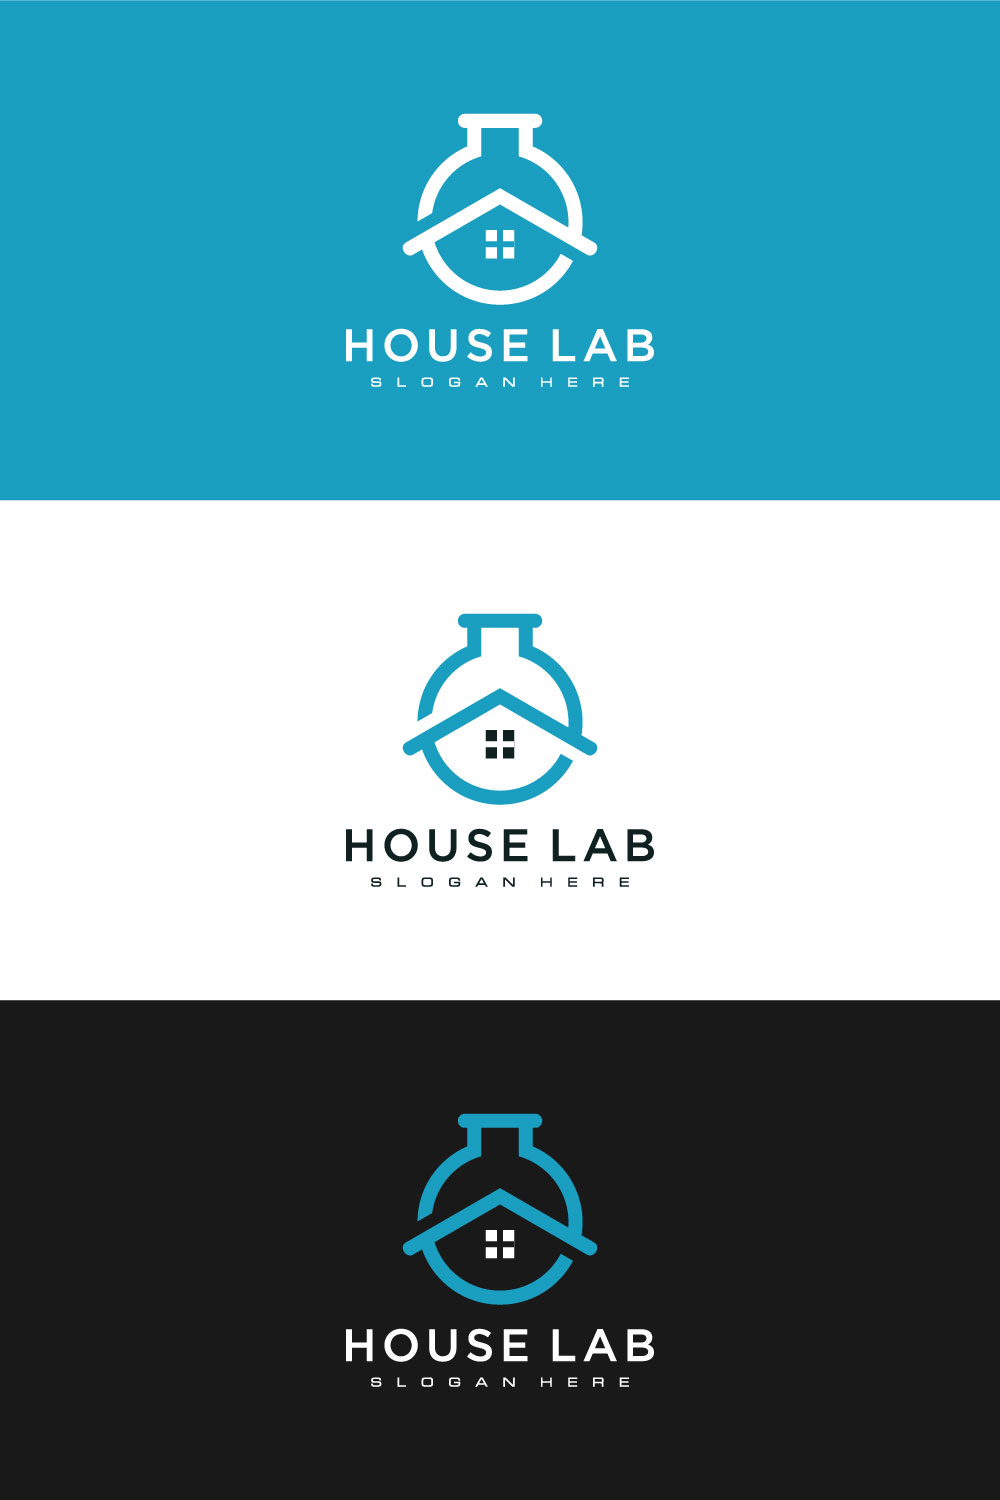 House Lab Home Laboratory Logo Pinterest Image.